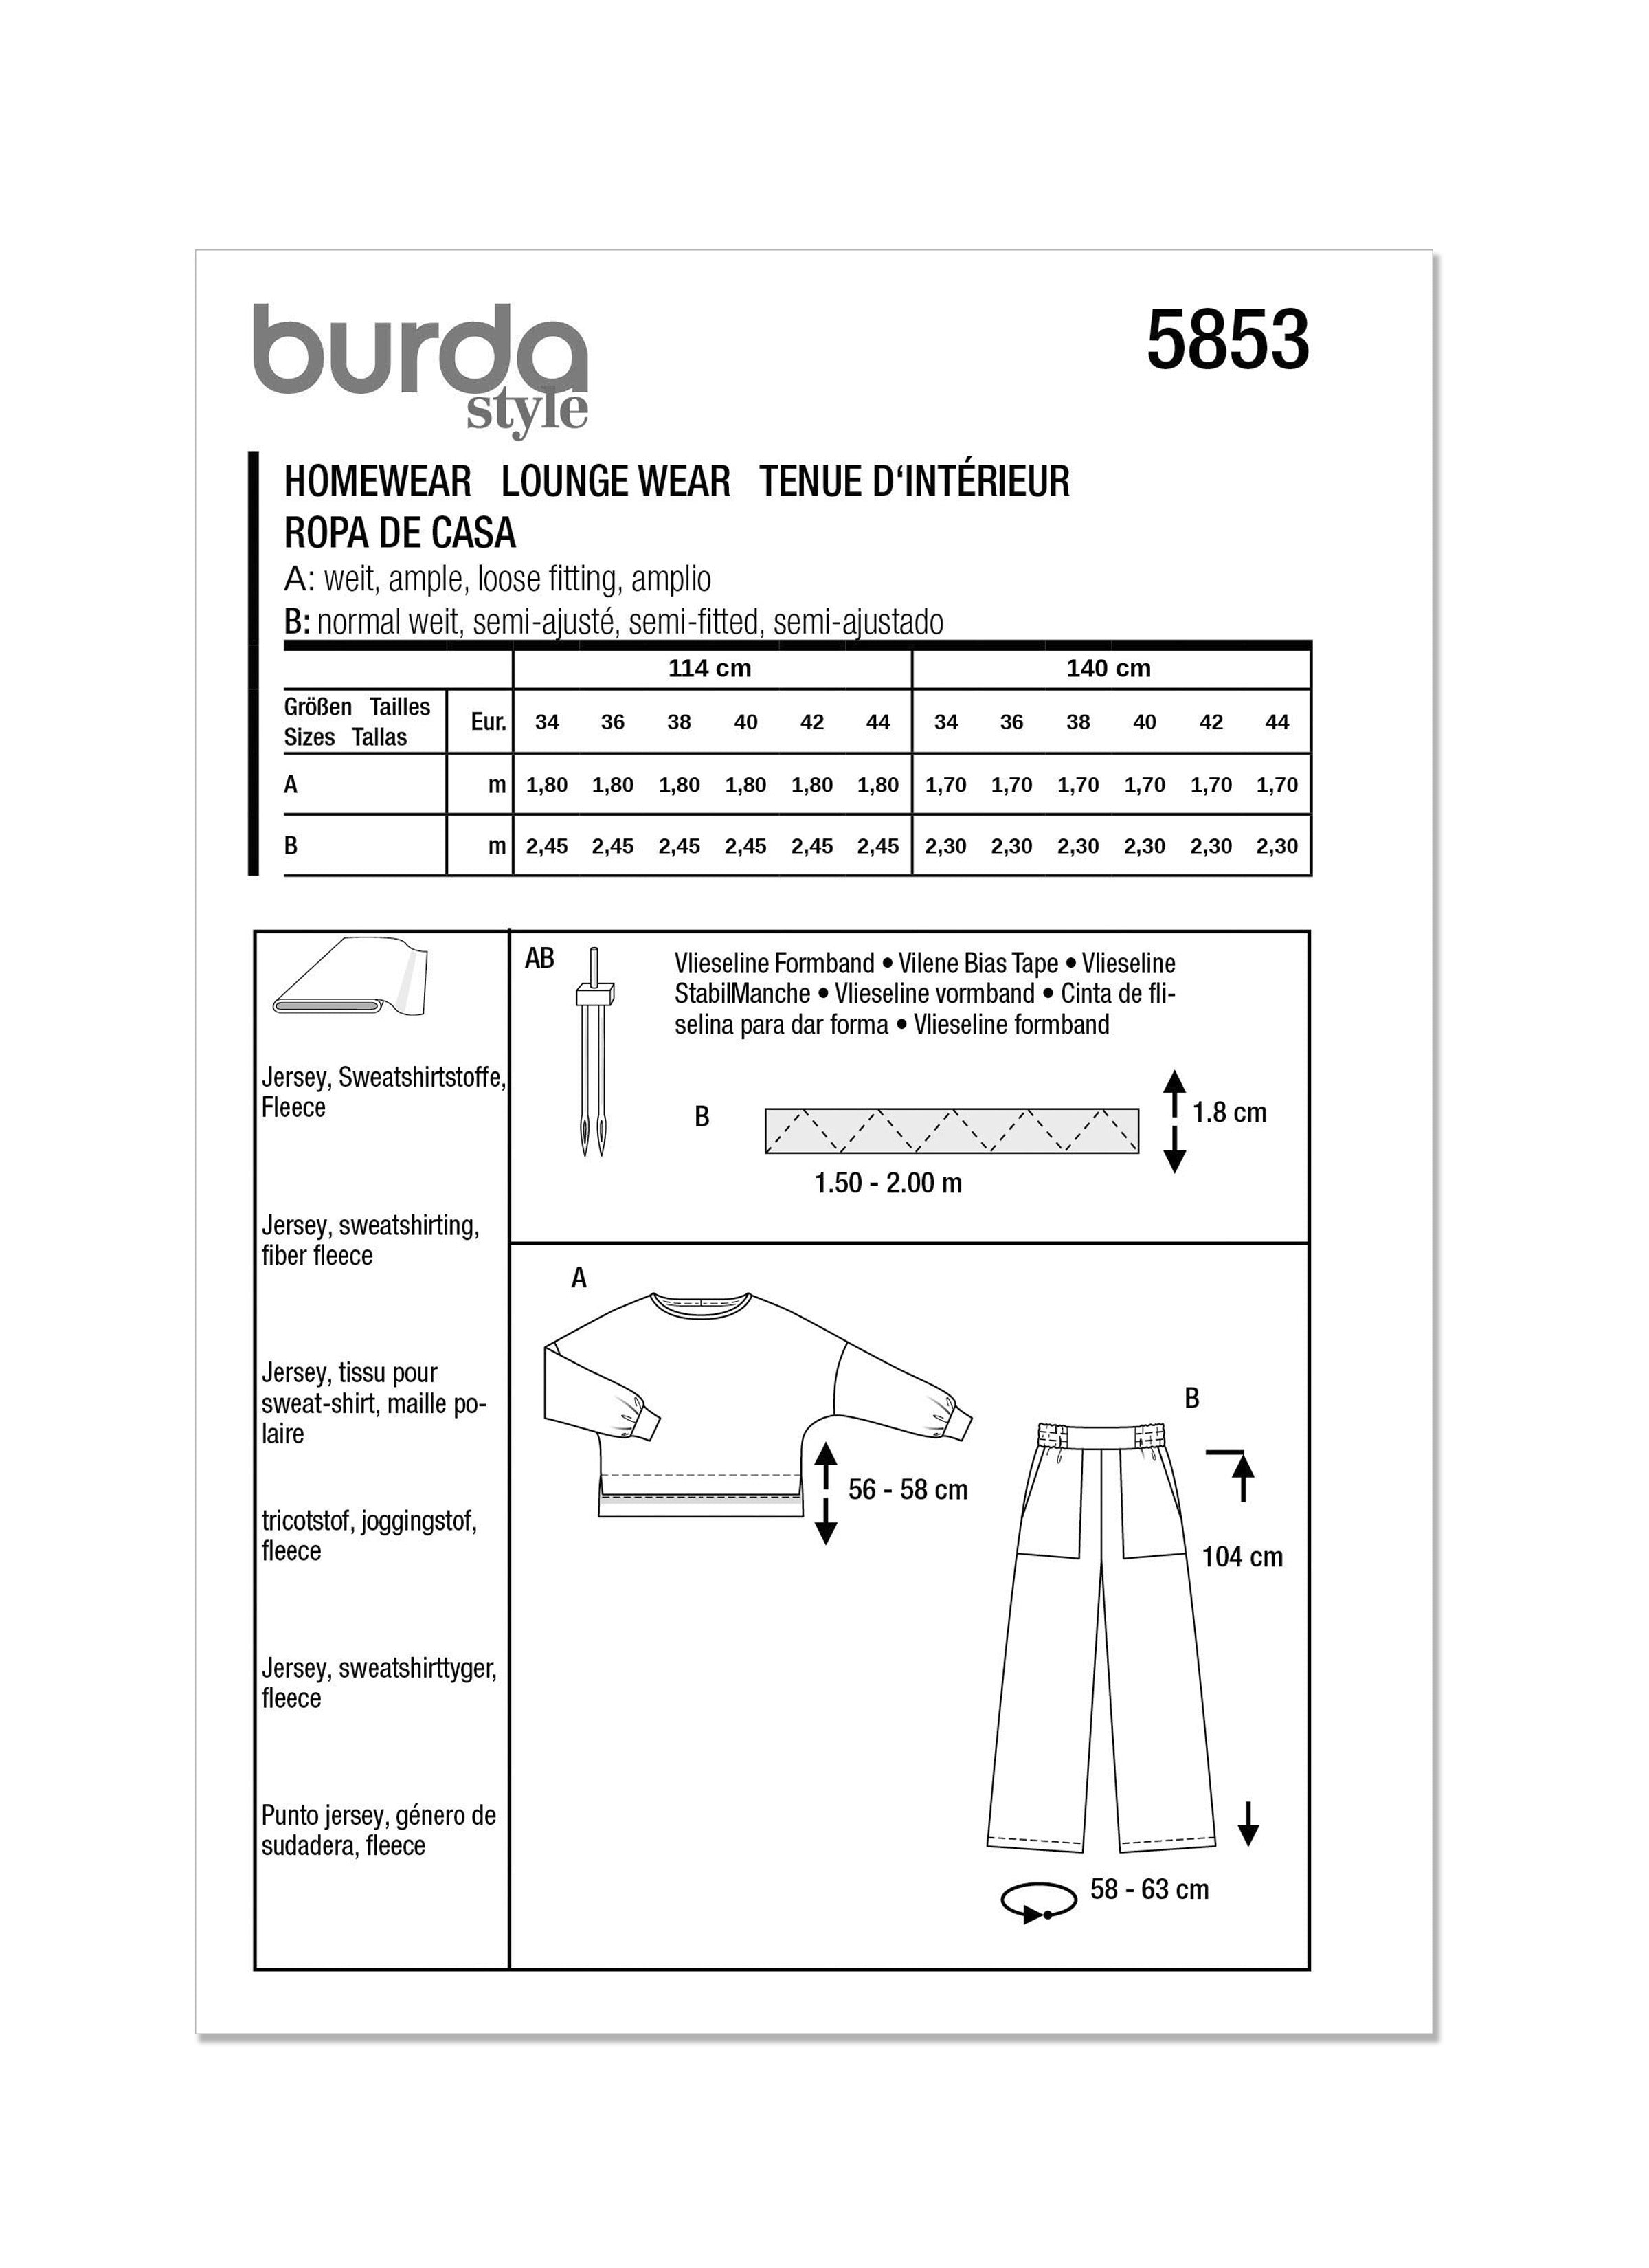 Burda Sewing Pattern 5853 Misses' Homewear from Jaycotts Sewing Supplies